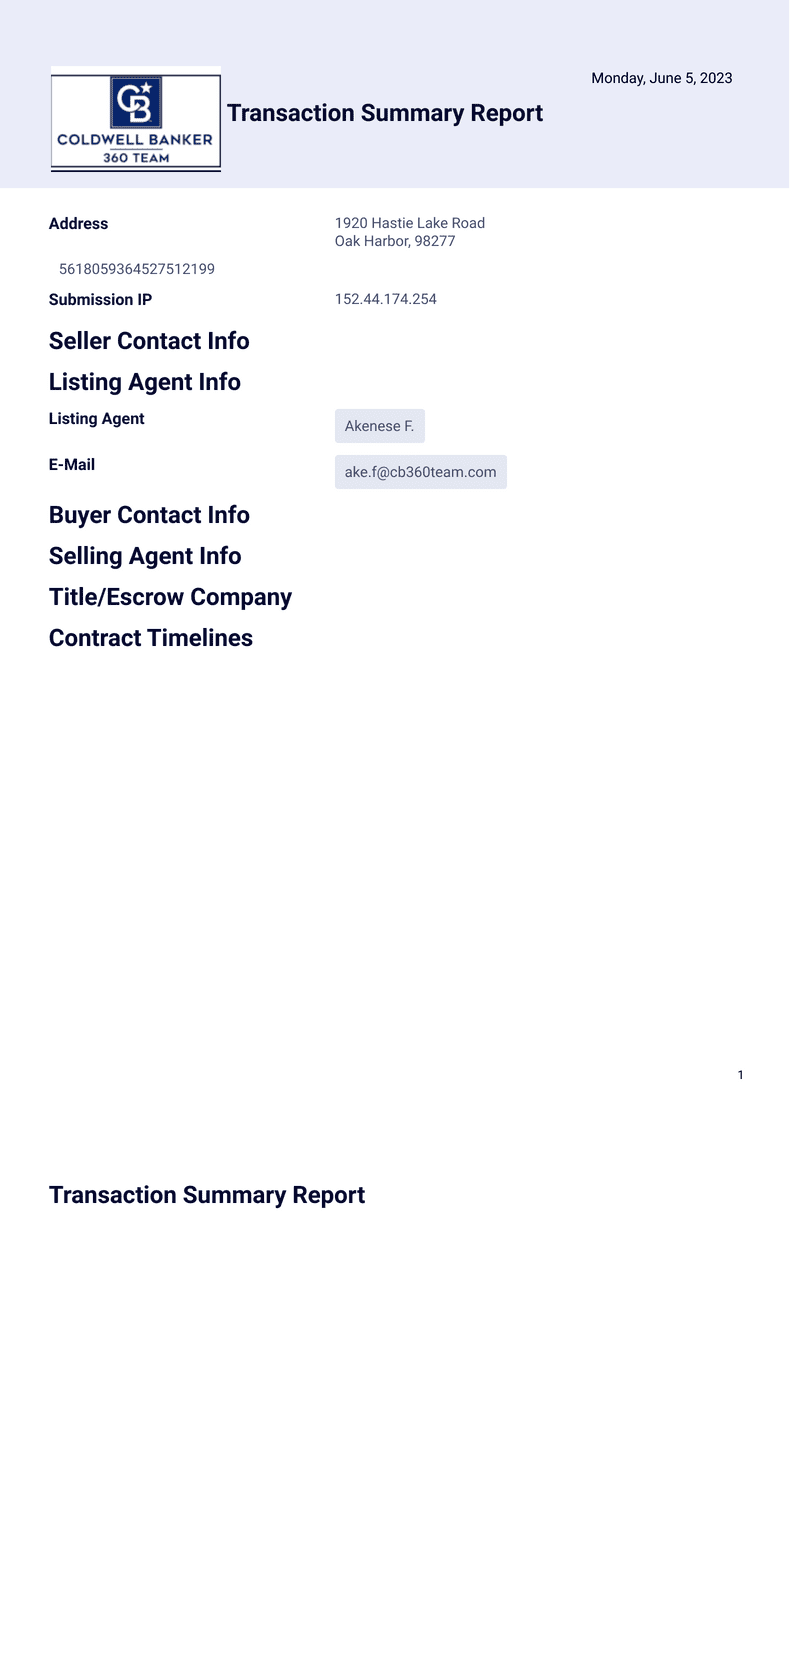 PDF Templates: Transaction Summary